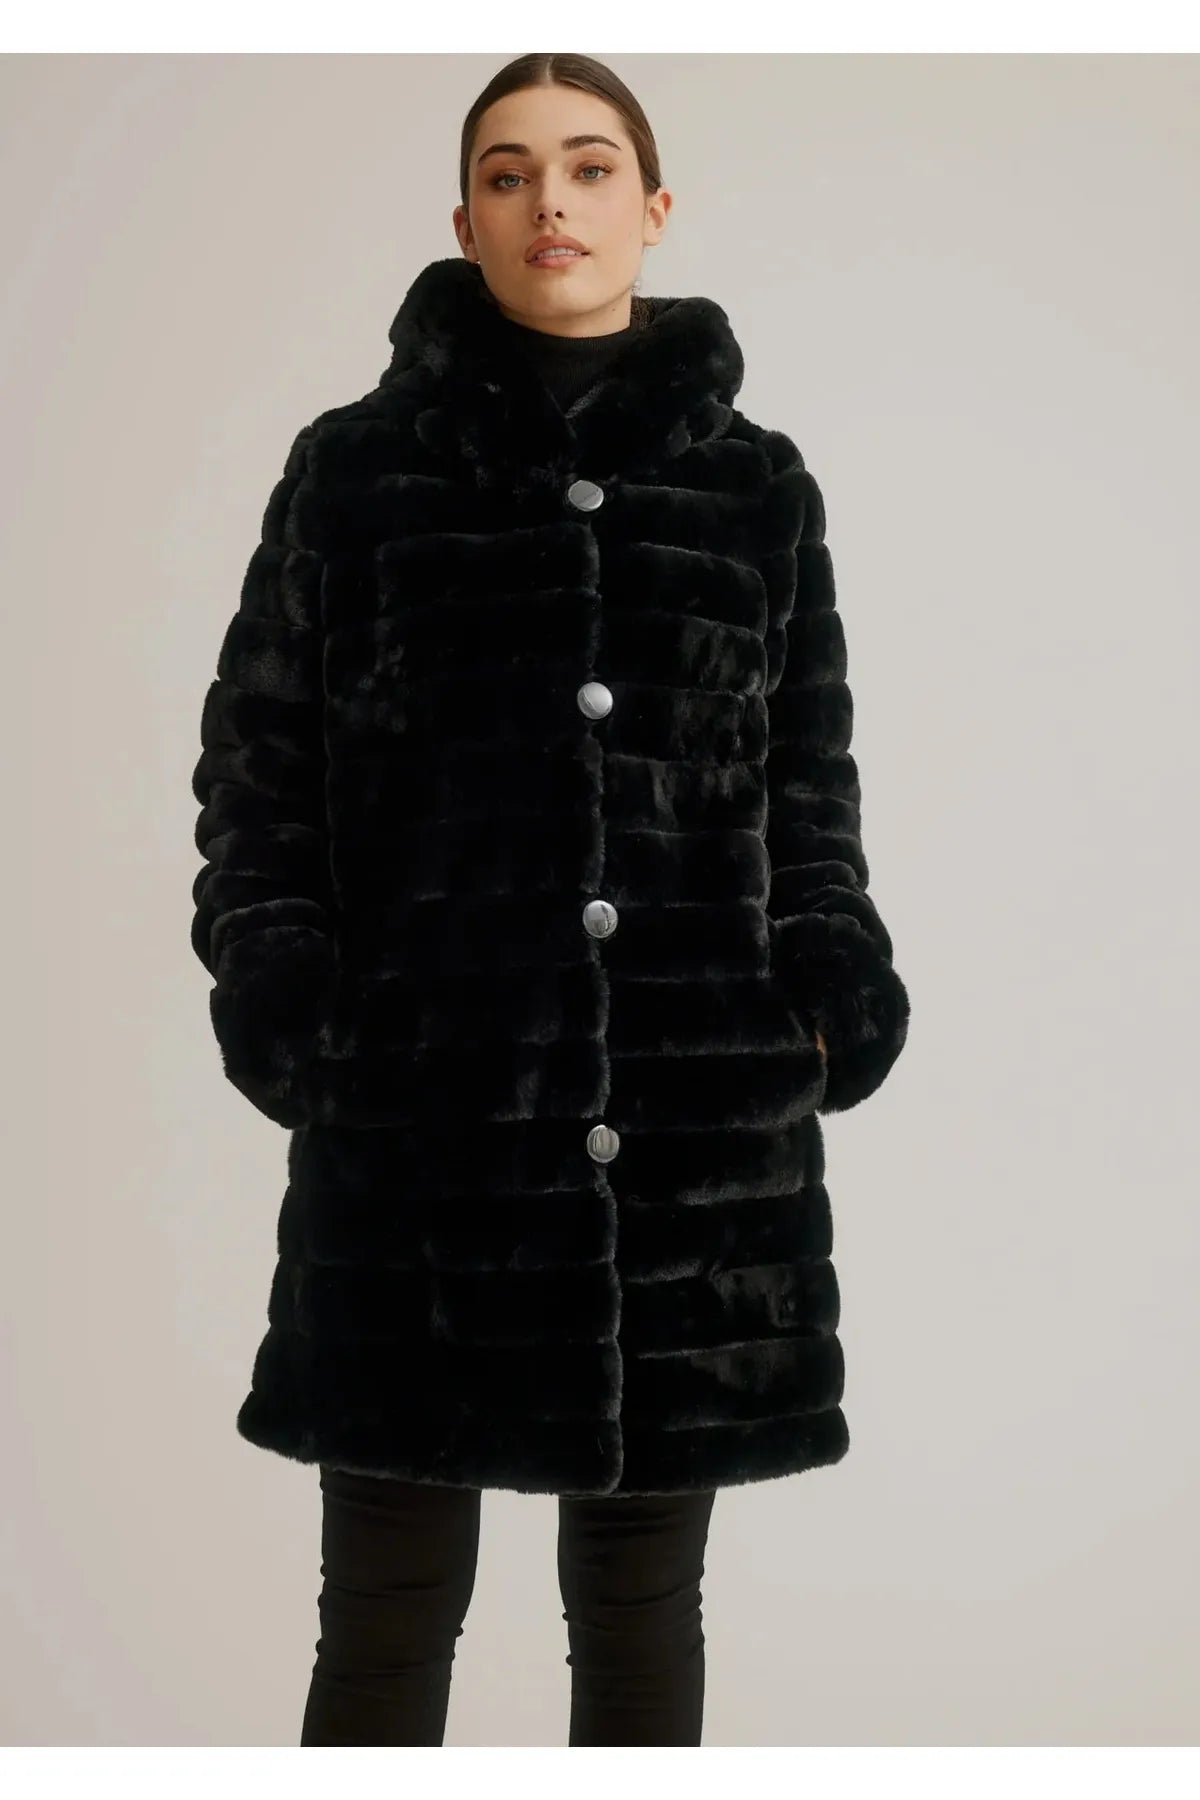 Nikki Jones Reversible Faux Fur Jacket - Style K4129RO, front, faux fur, black